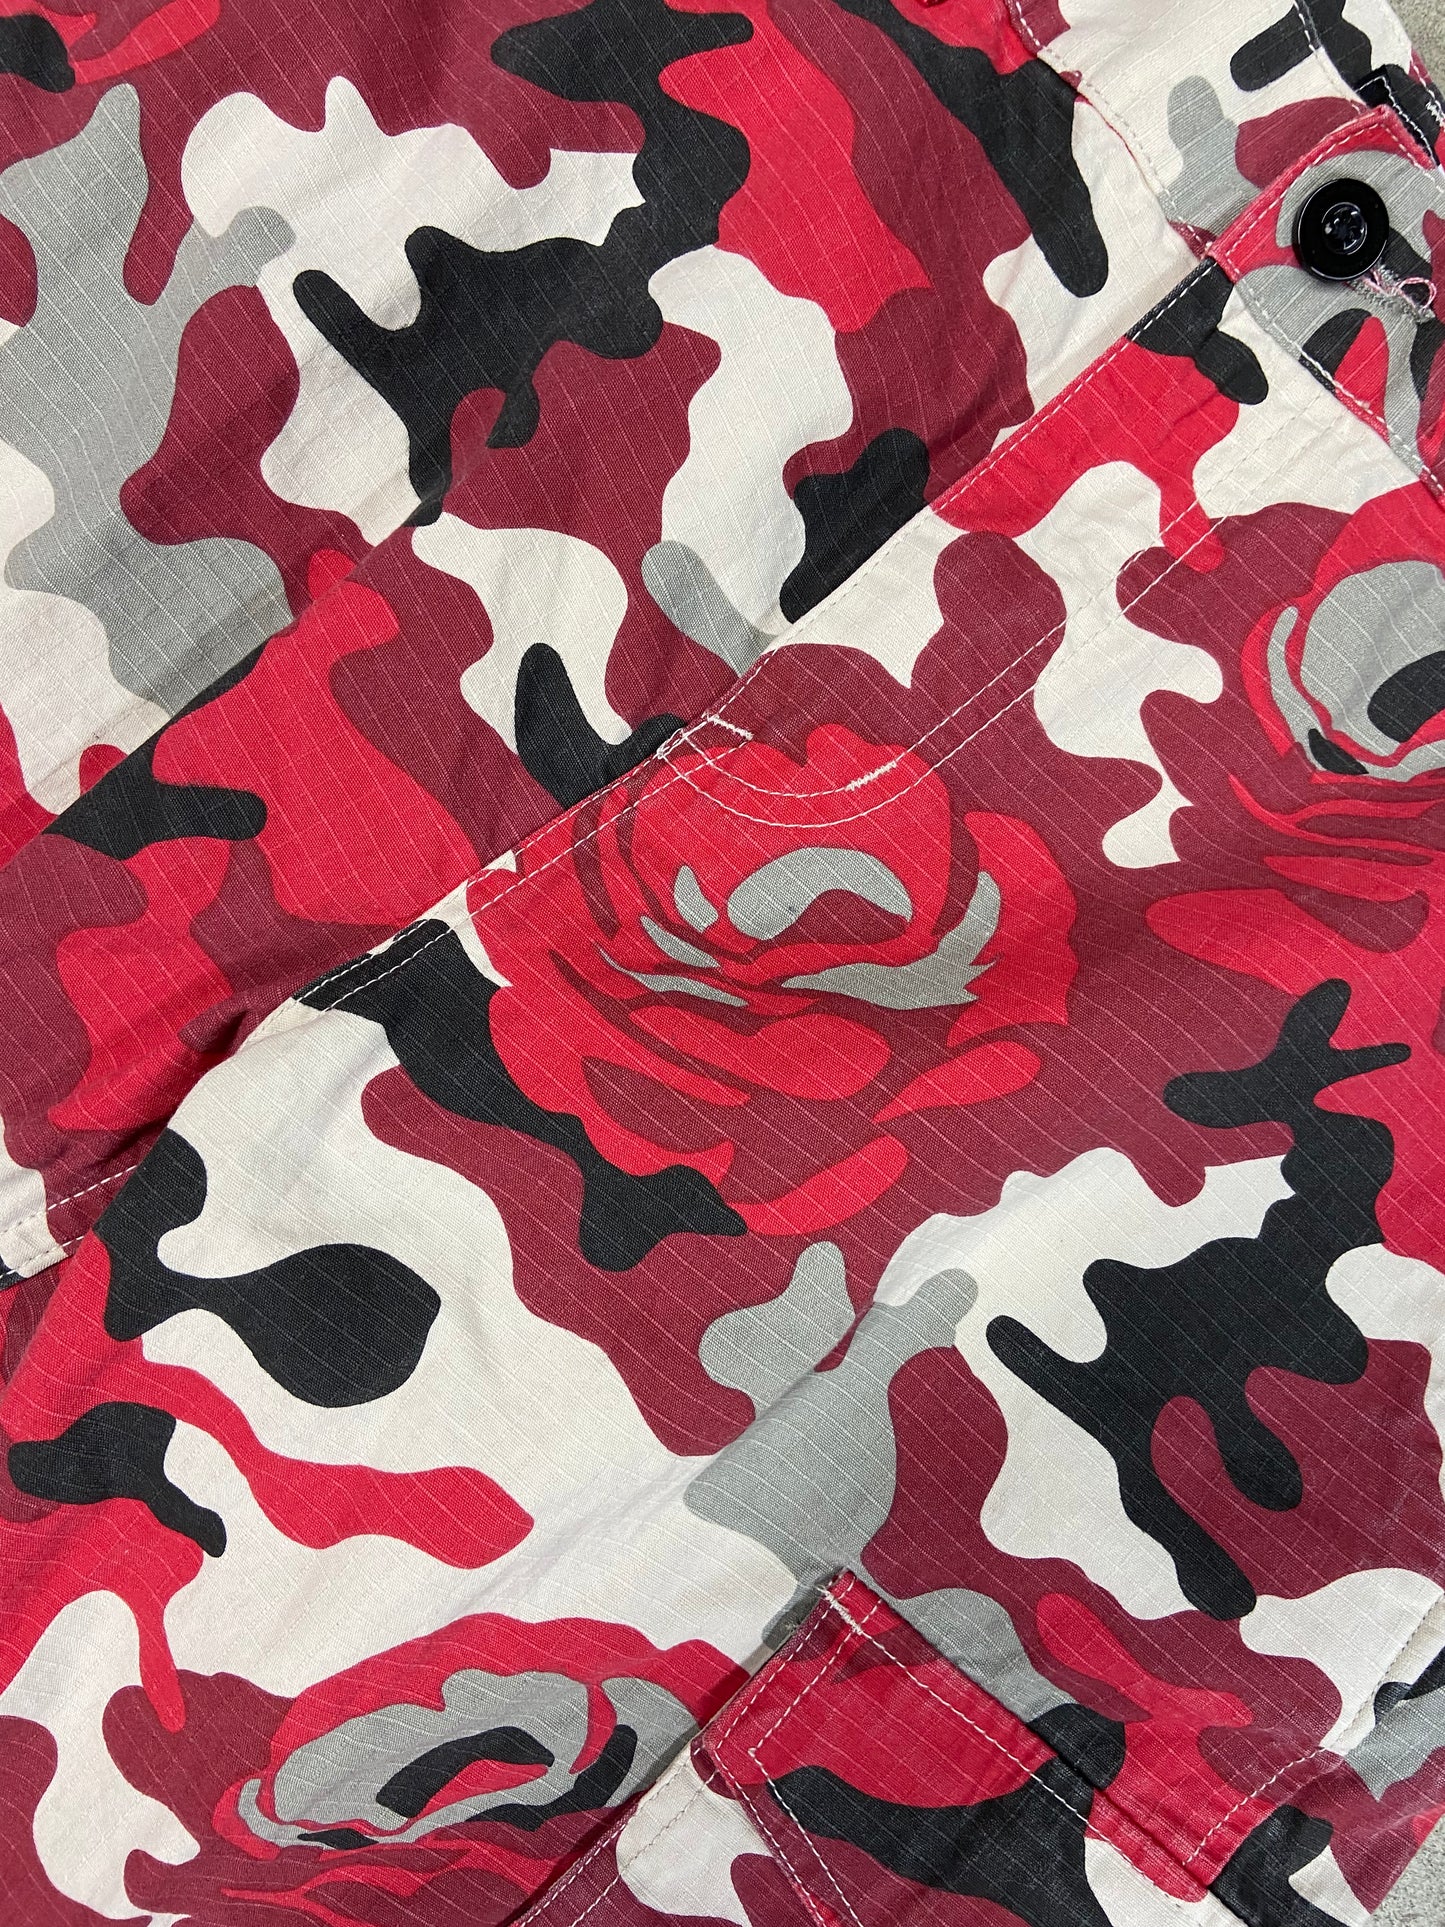 VTG LRG Red Camouflage Shorts Sz 32x10